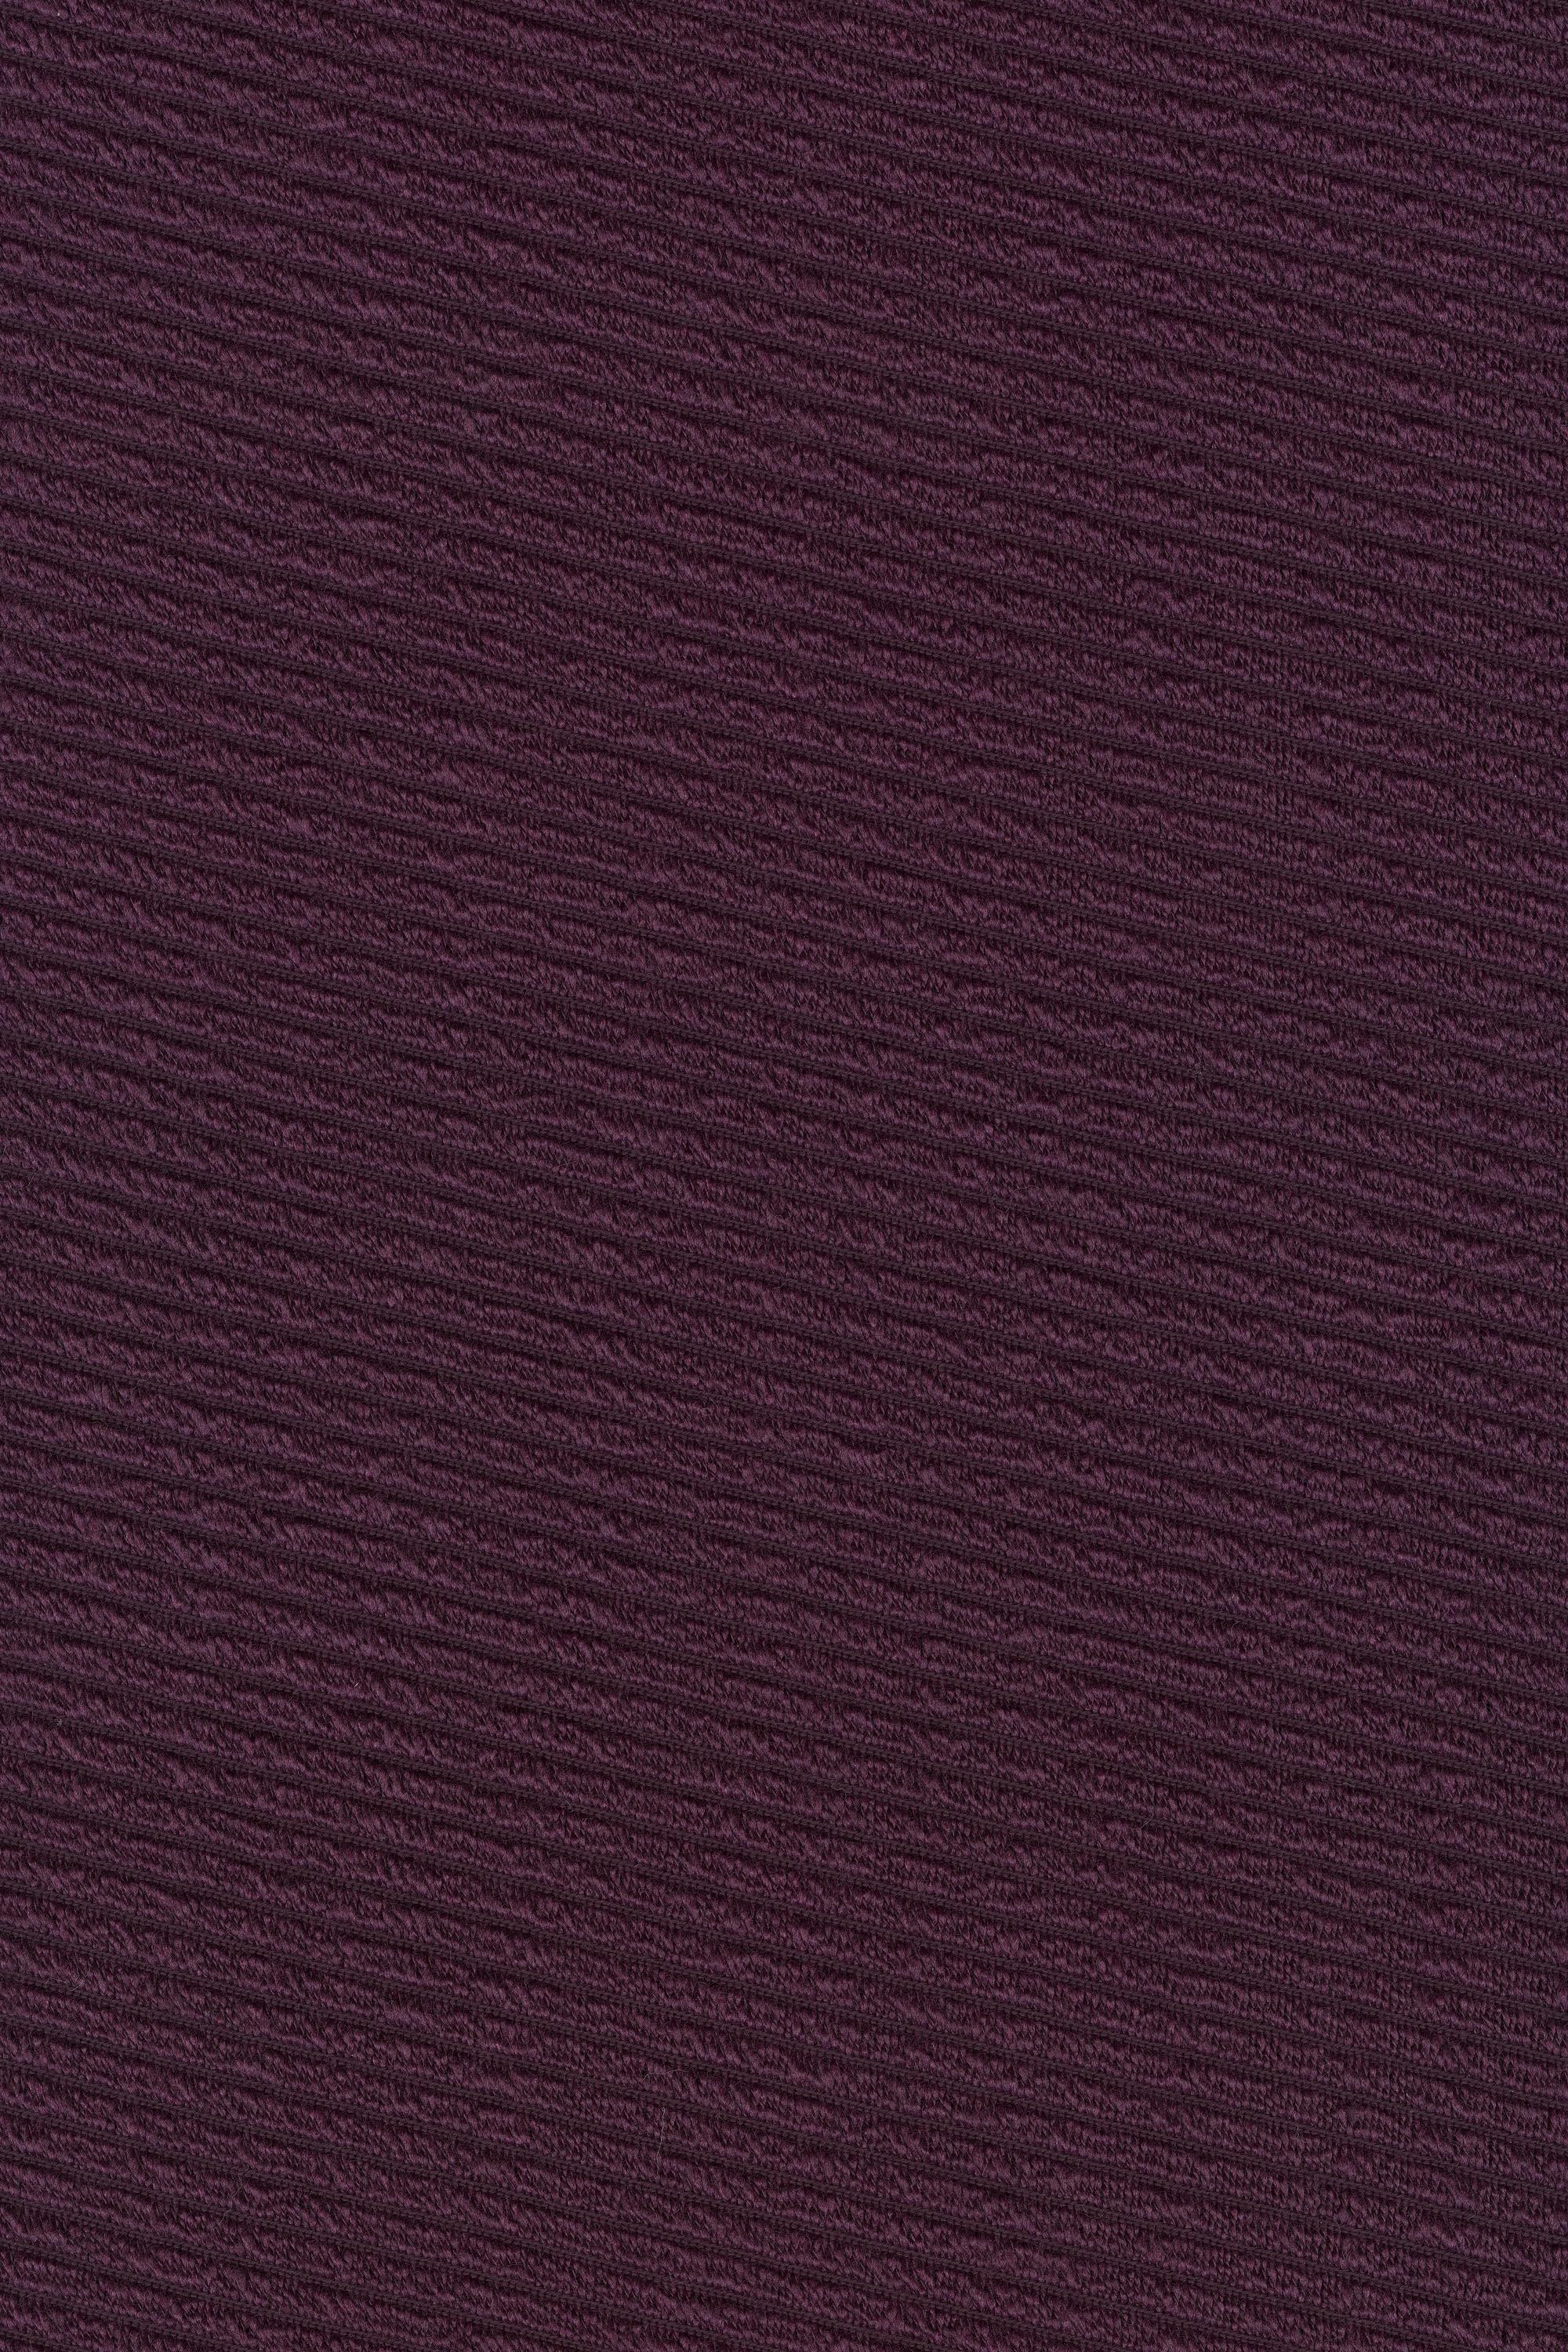 Kvadrat Aaren Upholstery Fabric 0683 by Raf Simons